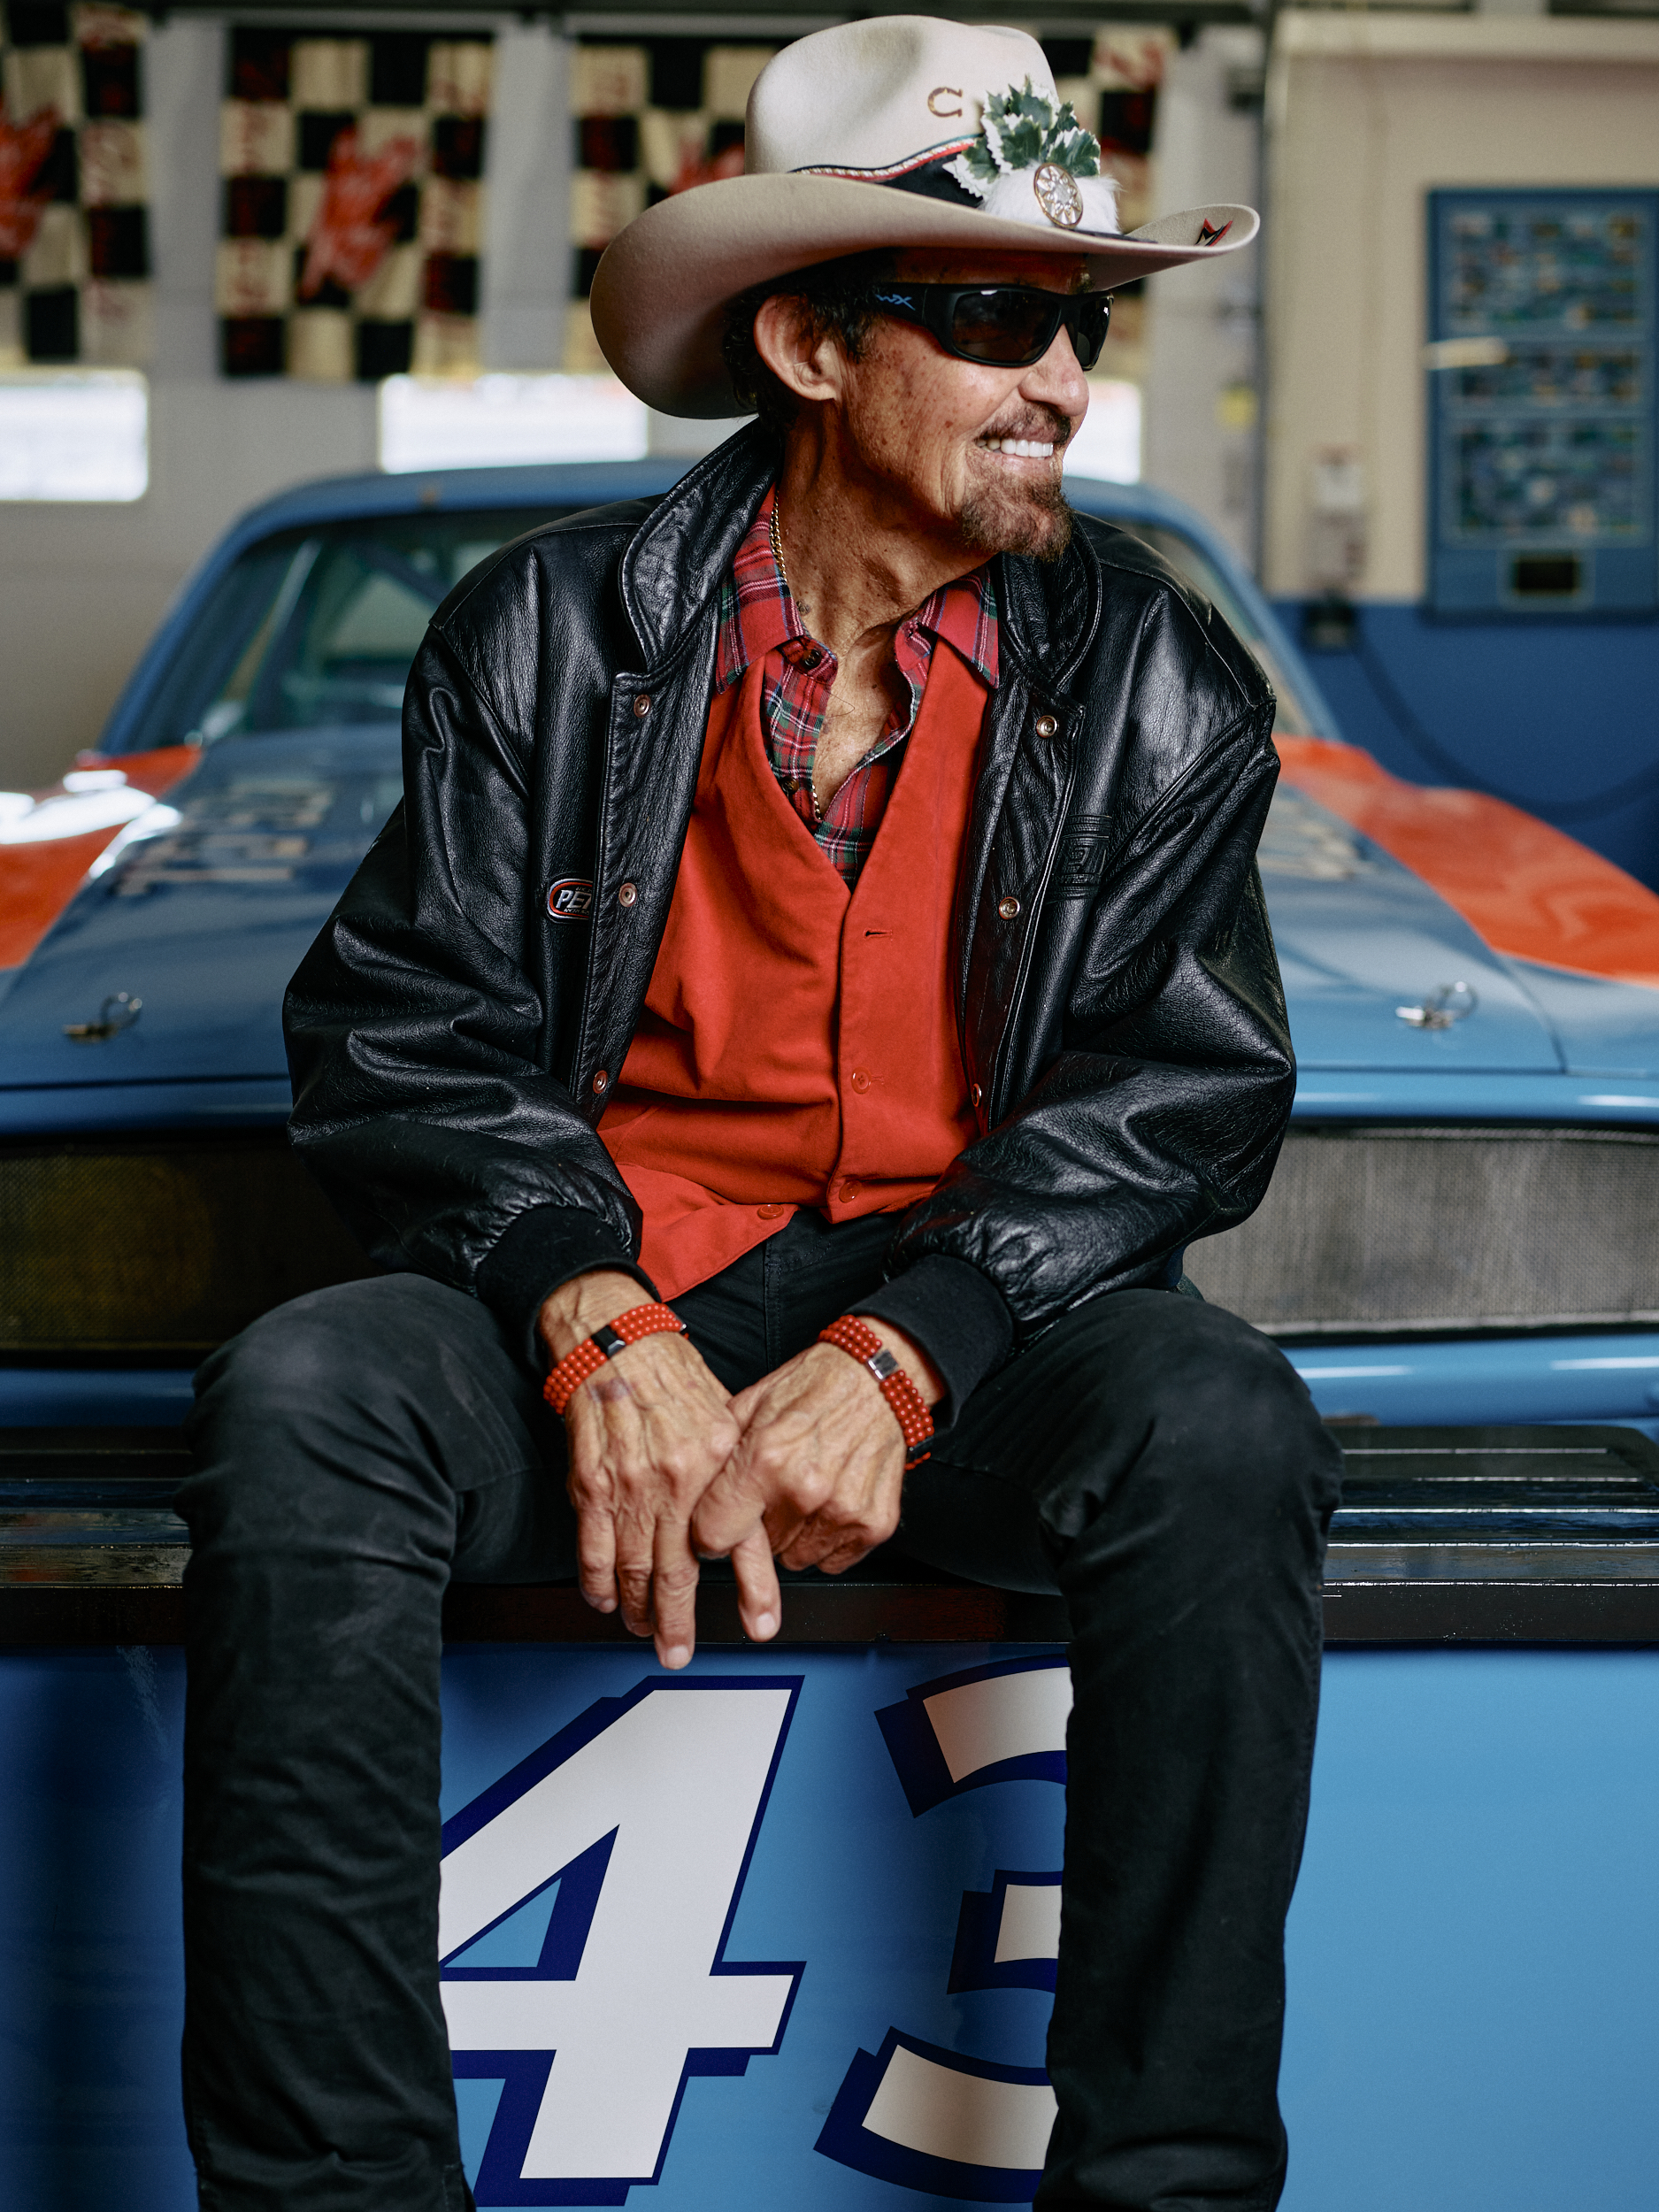 Richard Petty at his car museum in Randleman, NC.